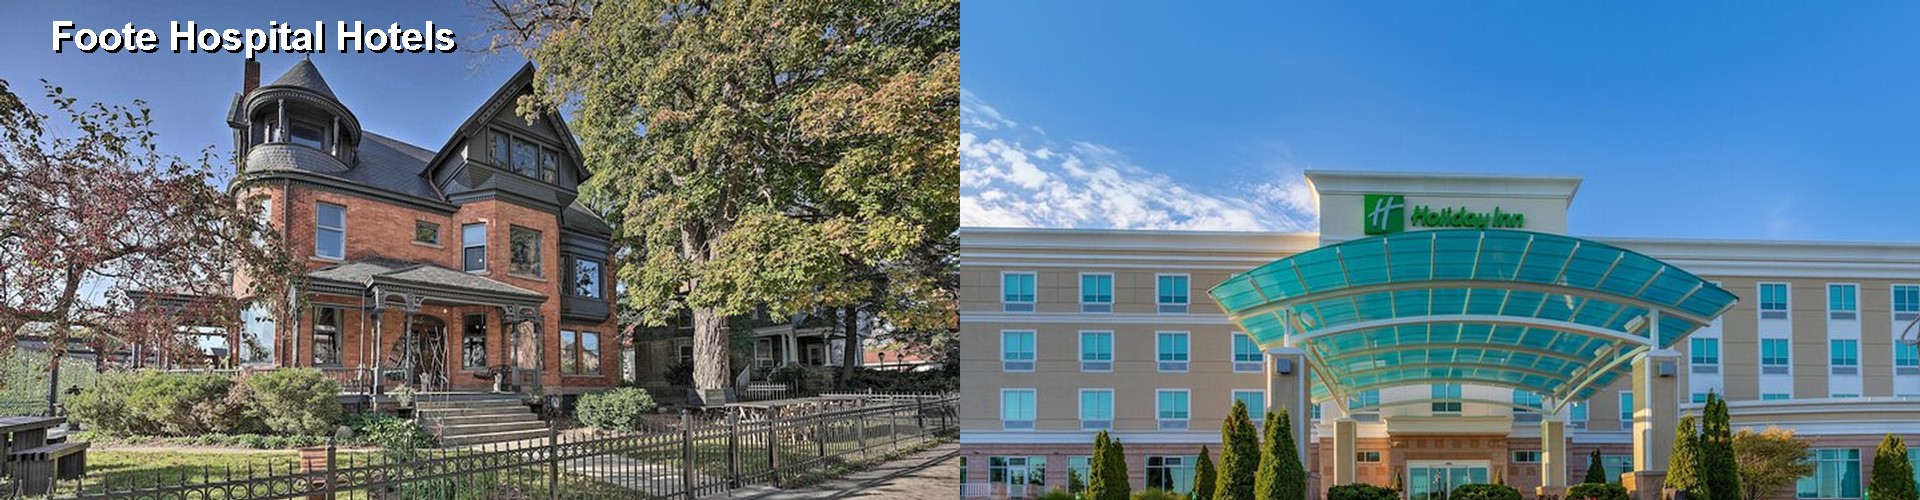 2 Best Hotels near Foote Hospital